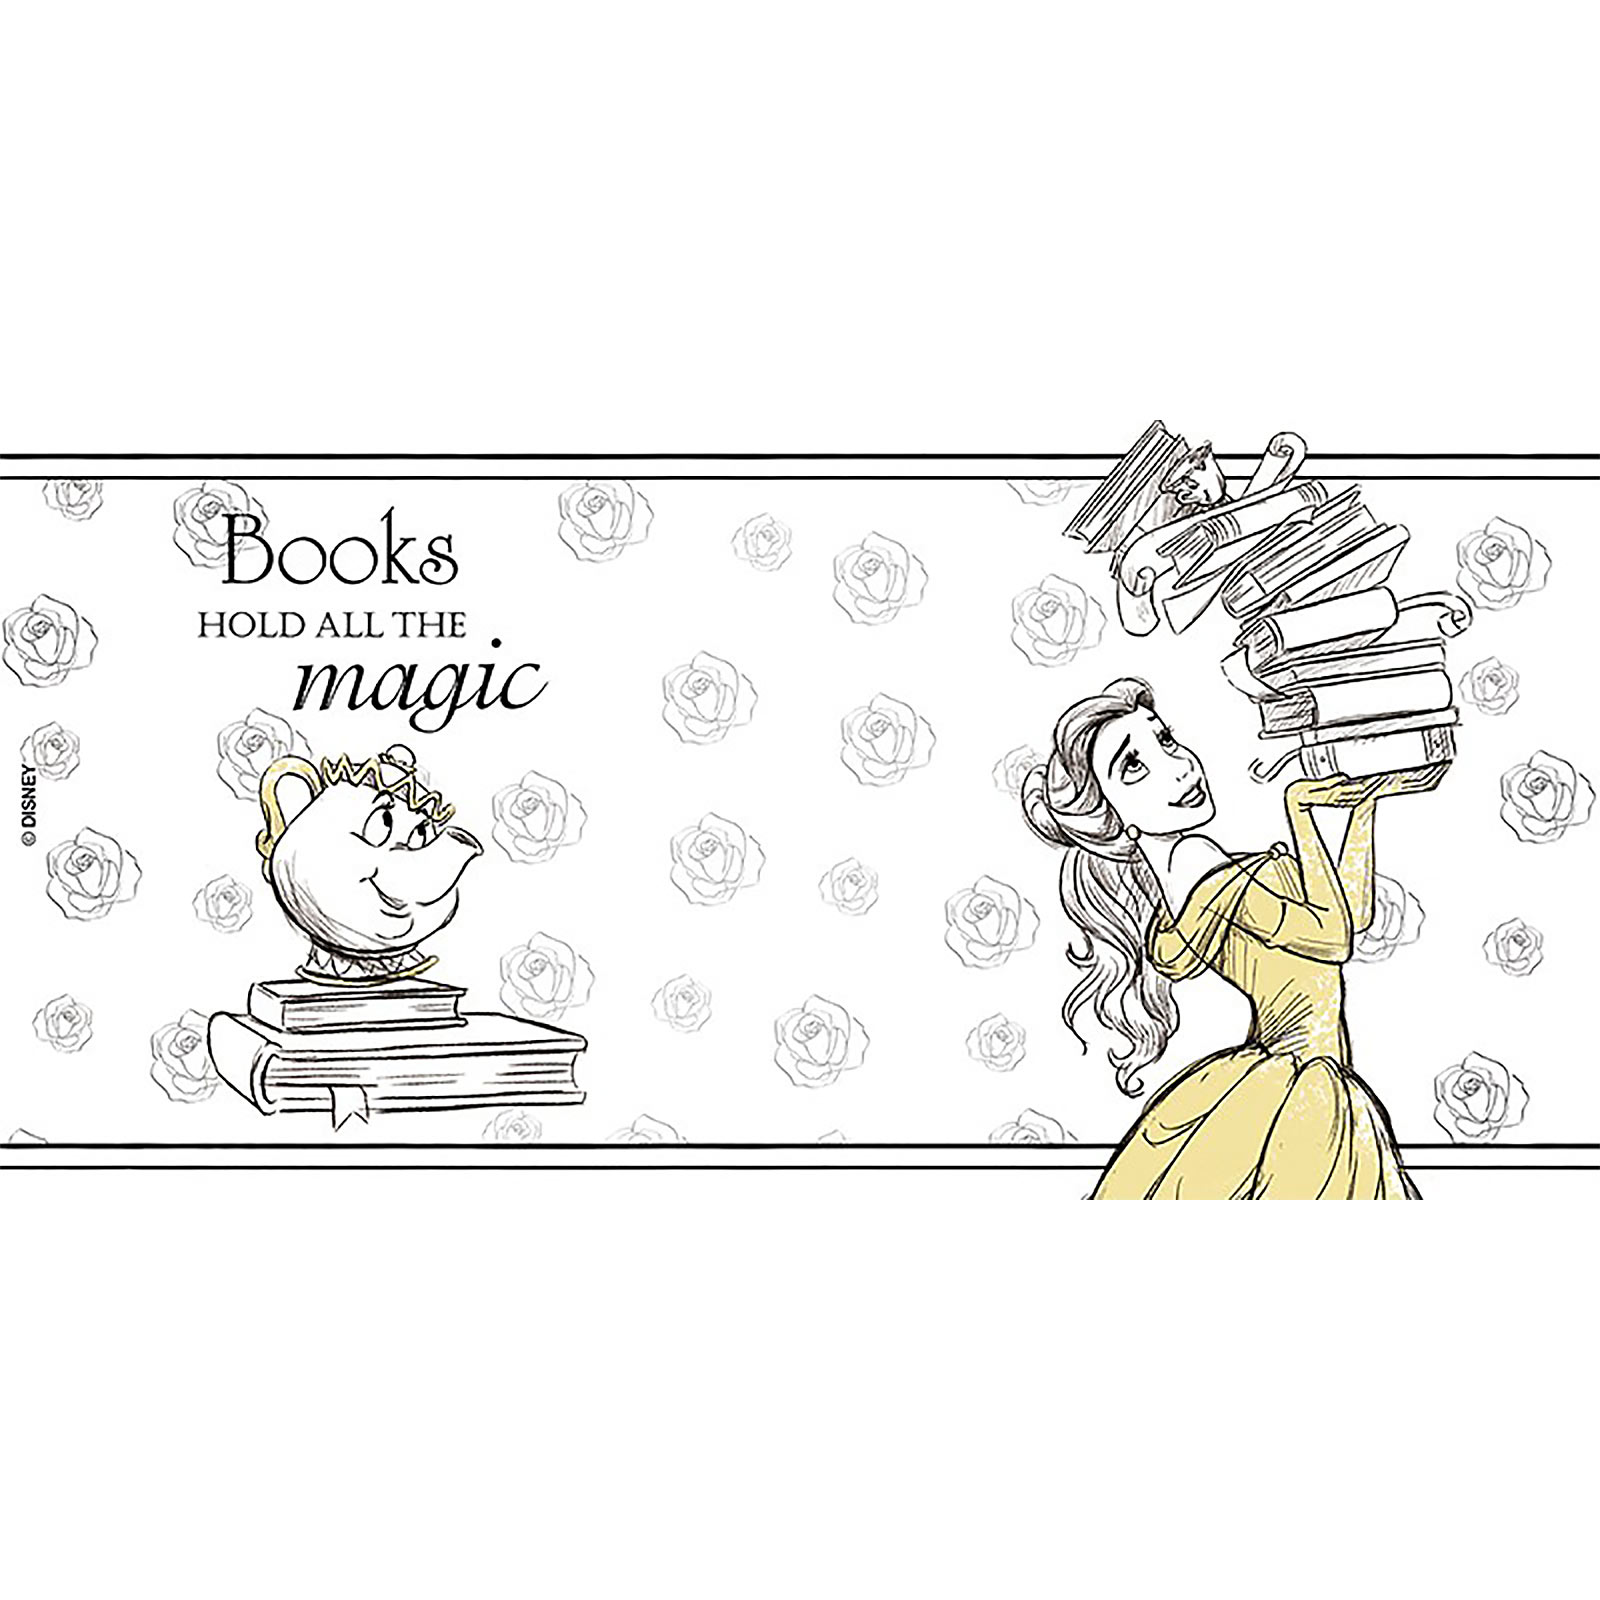 Beauty and the Beast - Books Hold Magic Mug